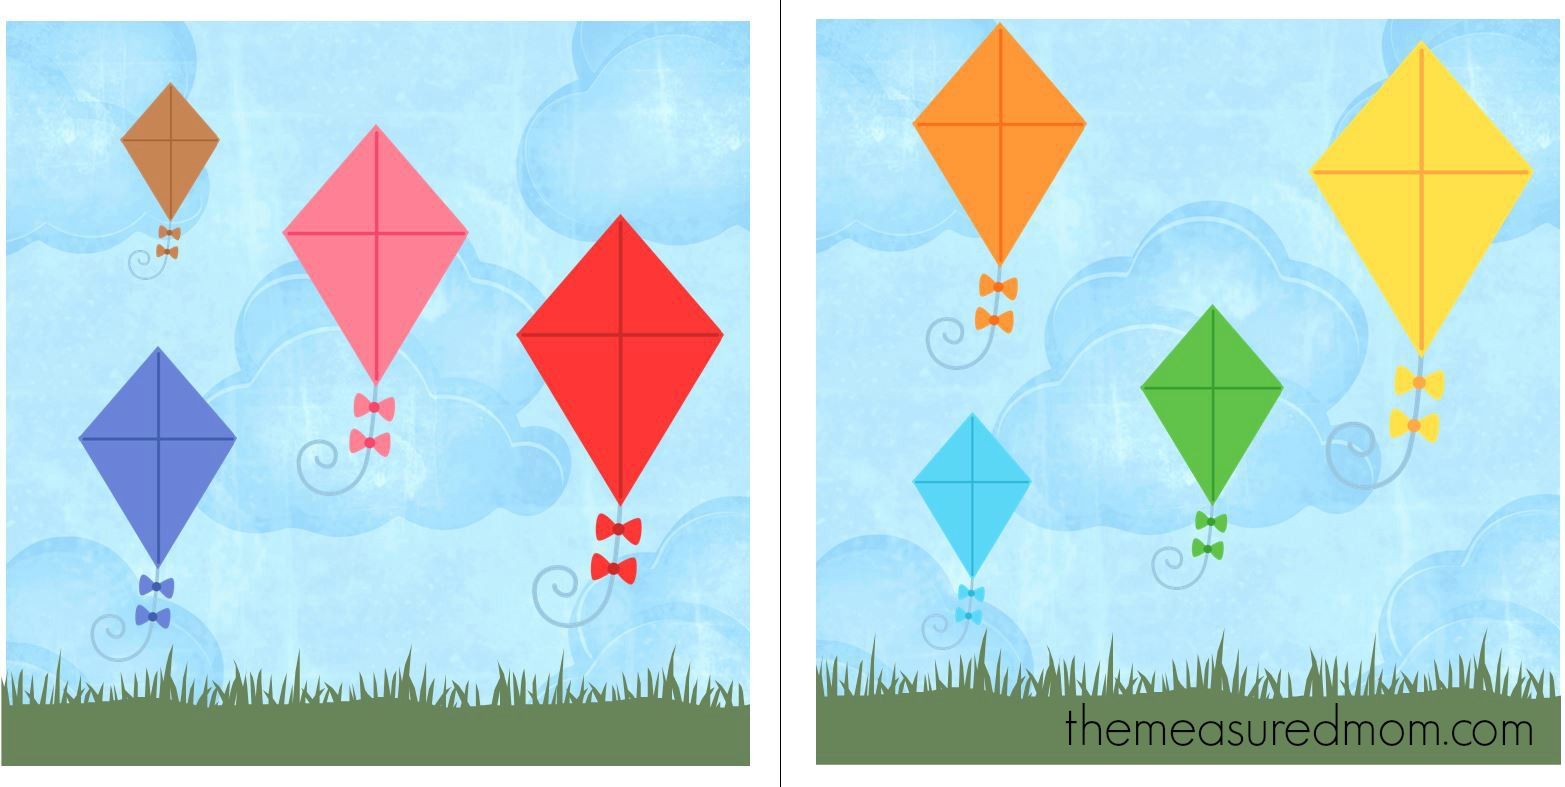 Free File Folder Game For Preschoolers: Kites! - The Measured Mom - Free Printable File Folder Games For Preschool